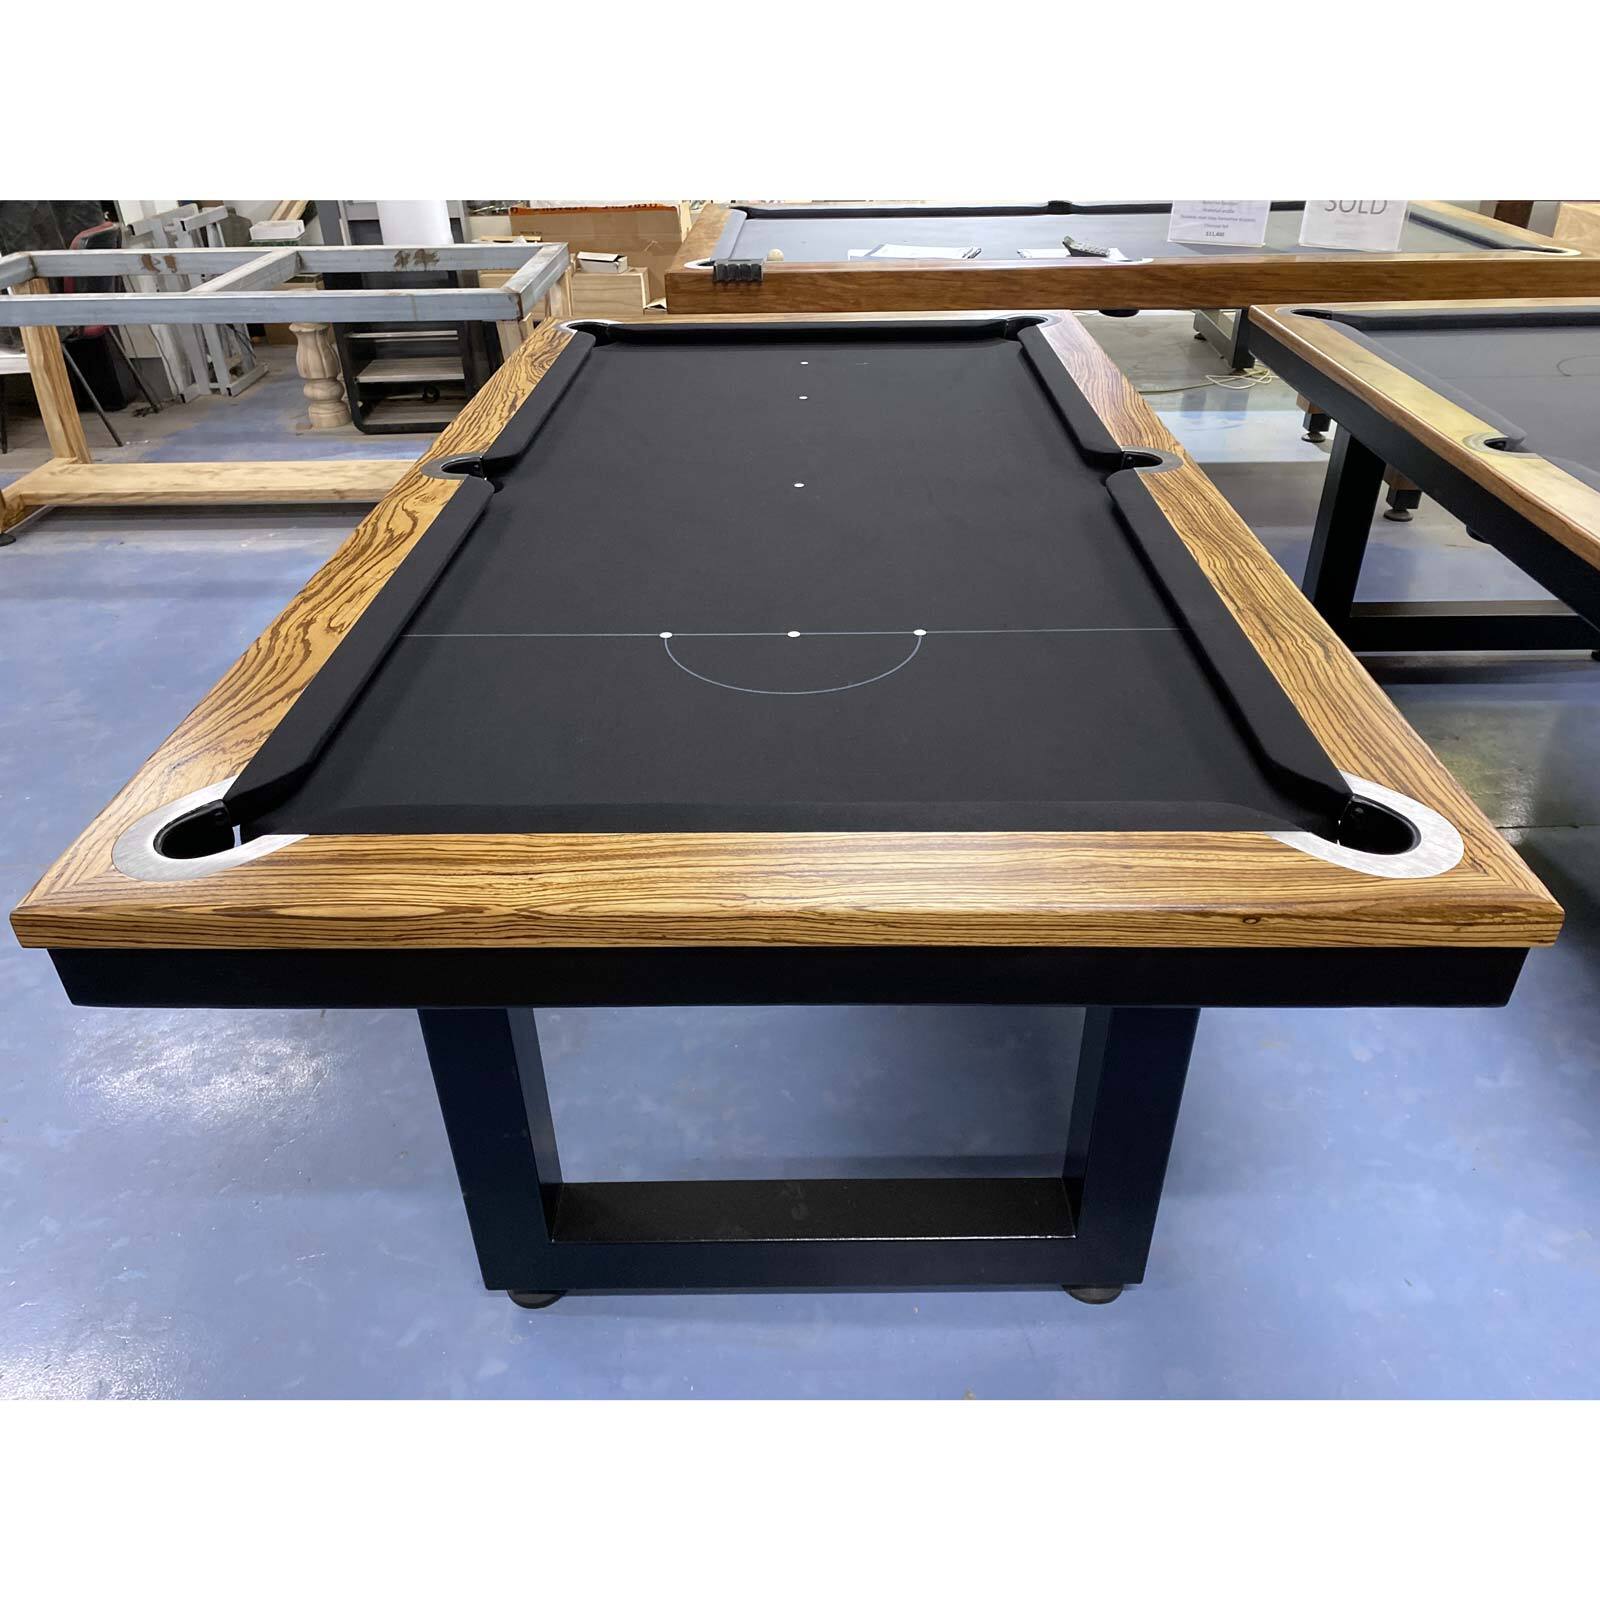 Pre-made 7 Foot Slate Odyssey Pool Billiards Table, Zebra Timber